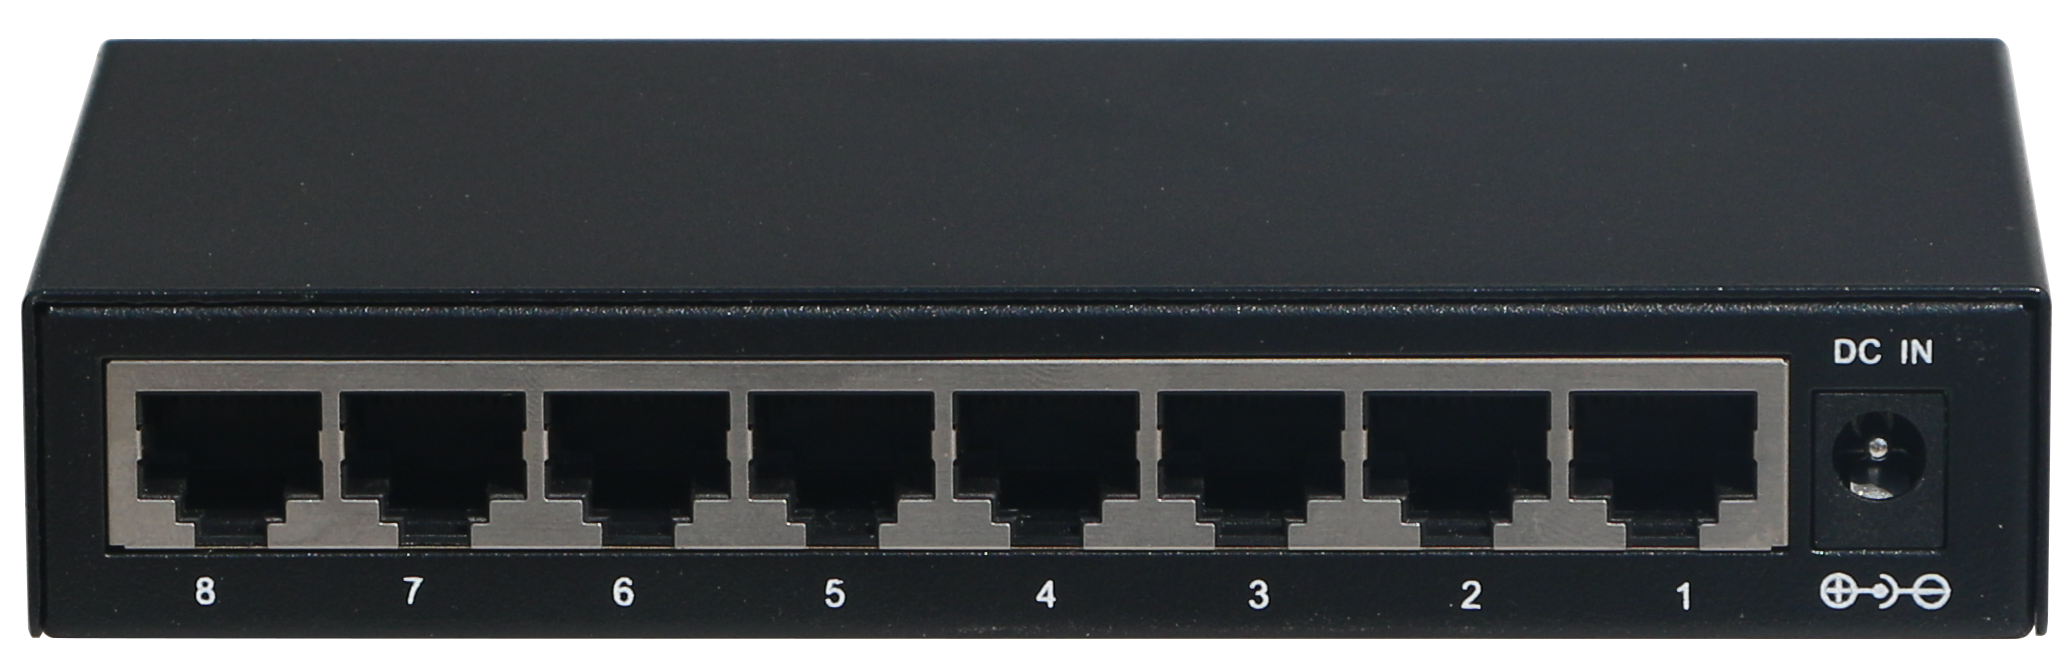 WI-SG108 | 8 Port GbE Non-PoE switch